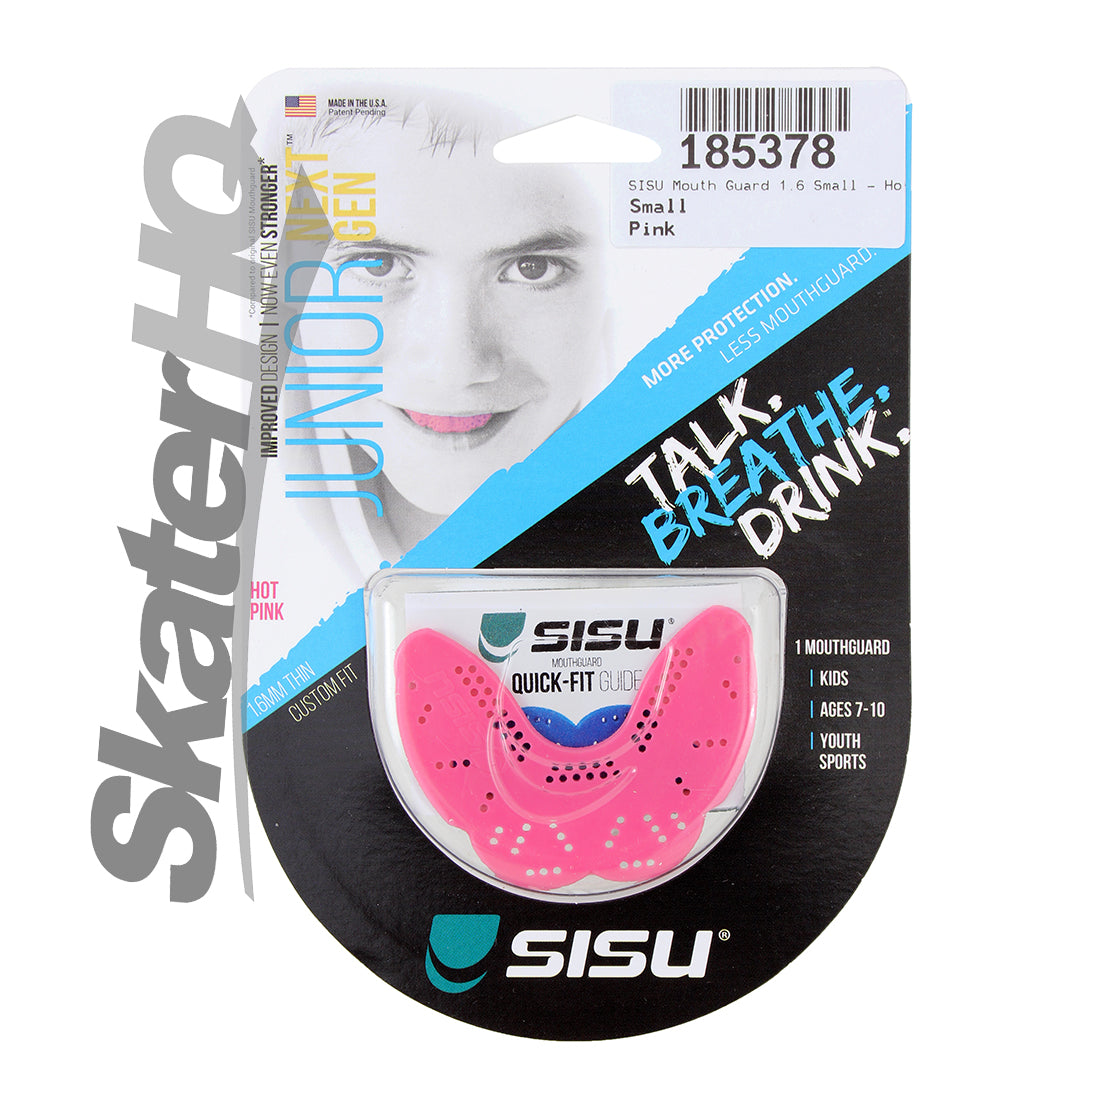 SISU Mouthguard 1.6 Small - Hot Pink Protective Mouthguards